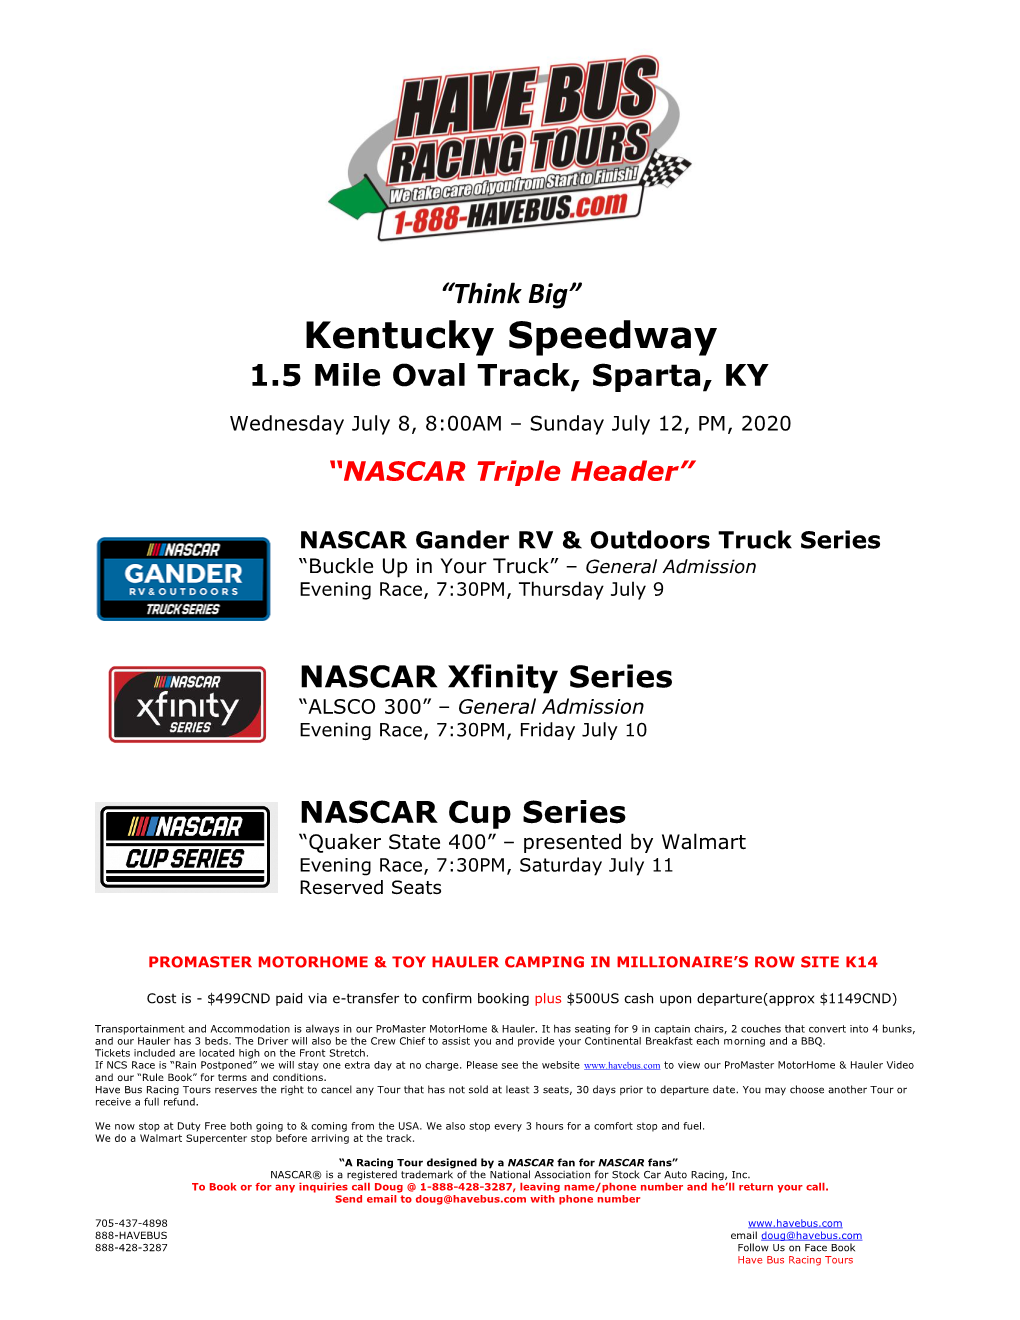 Kentucky Speedway 1.5 Mile Oval Track, Sparta, KY